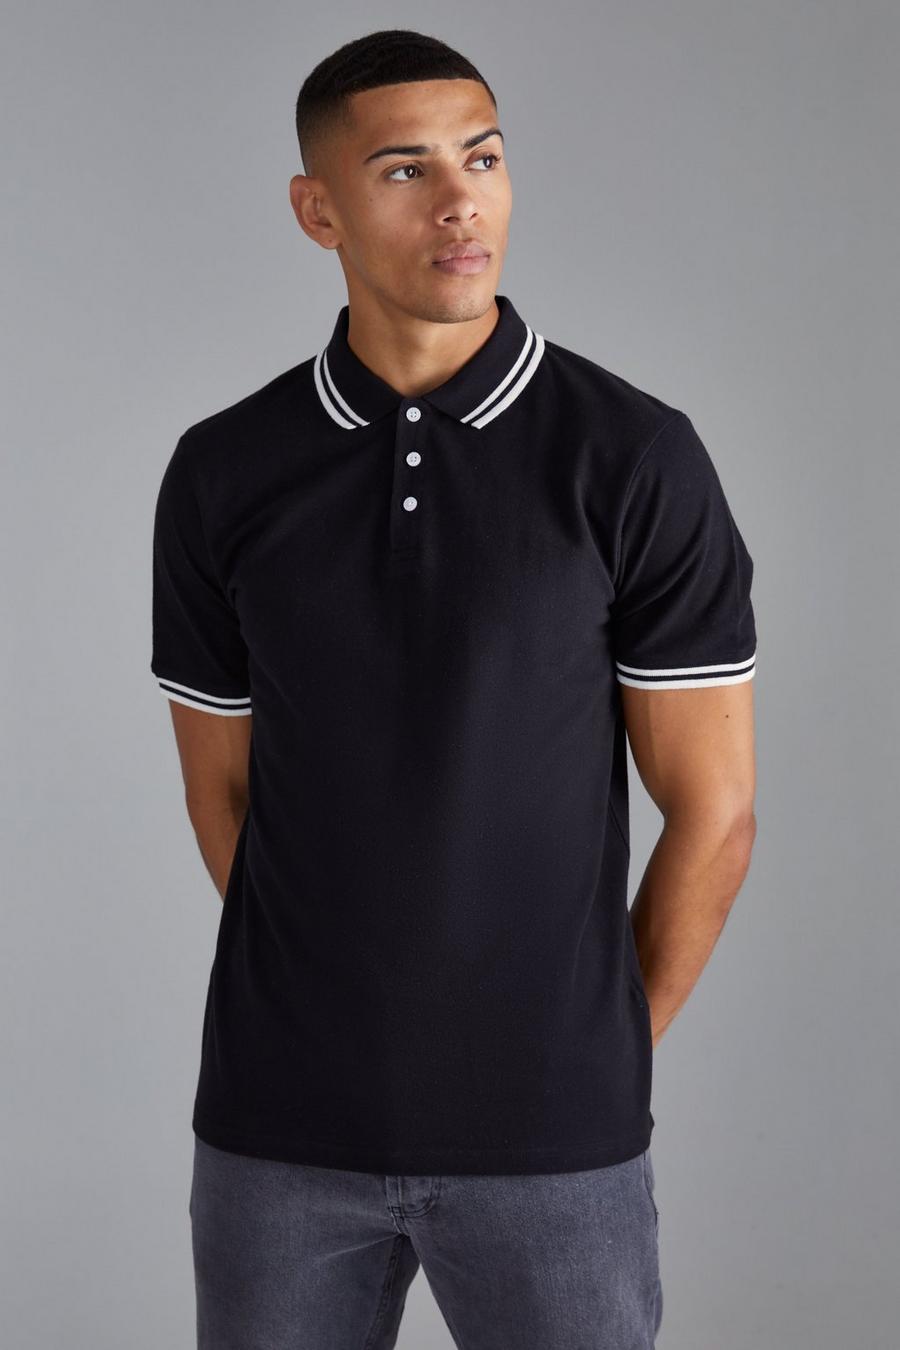 Black polo-shirts men usb box caps Shirts